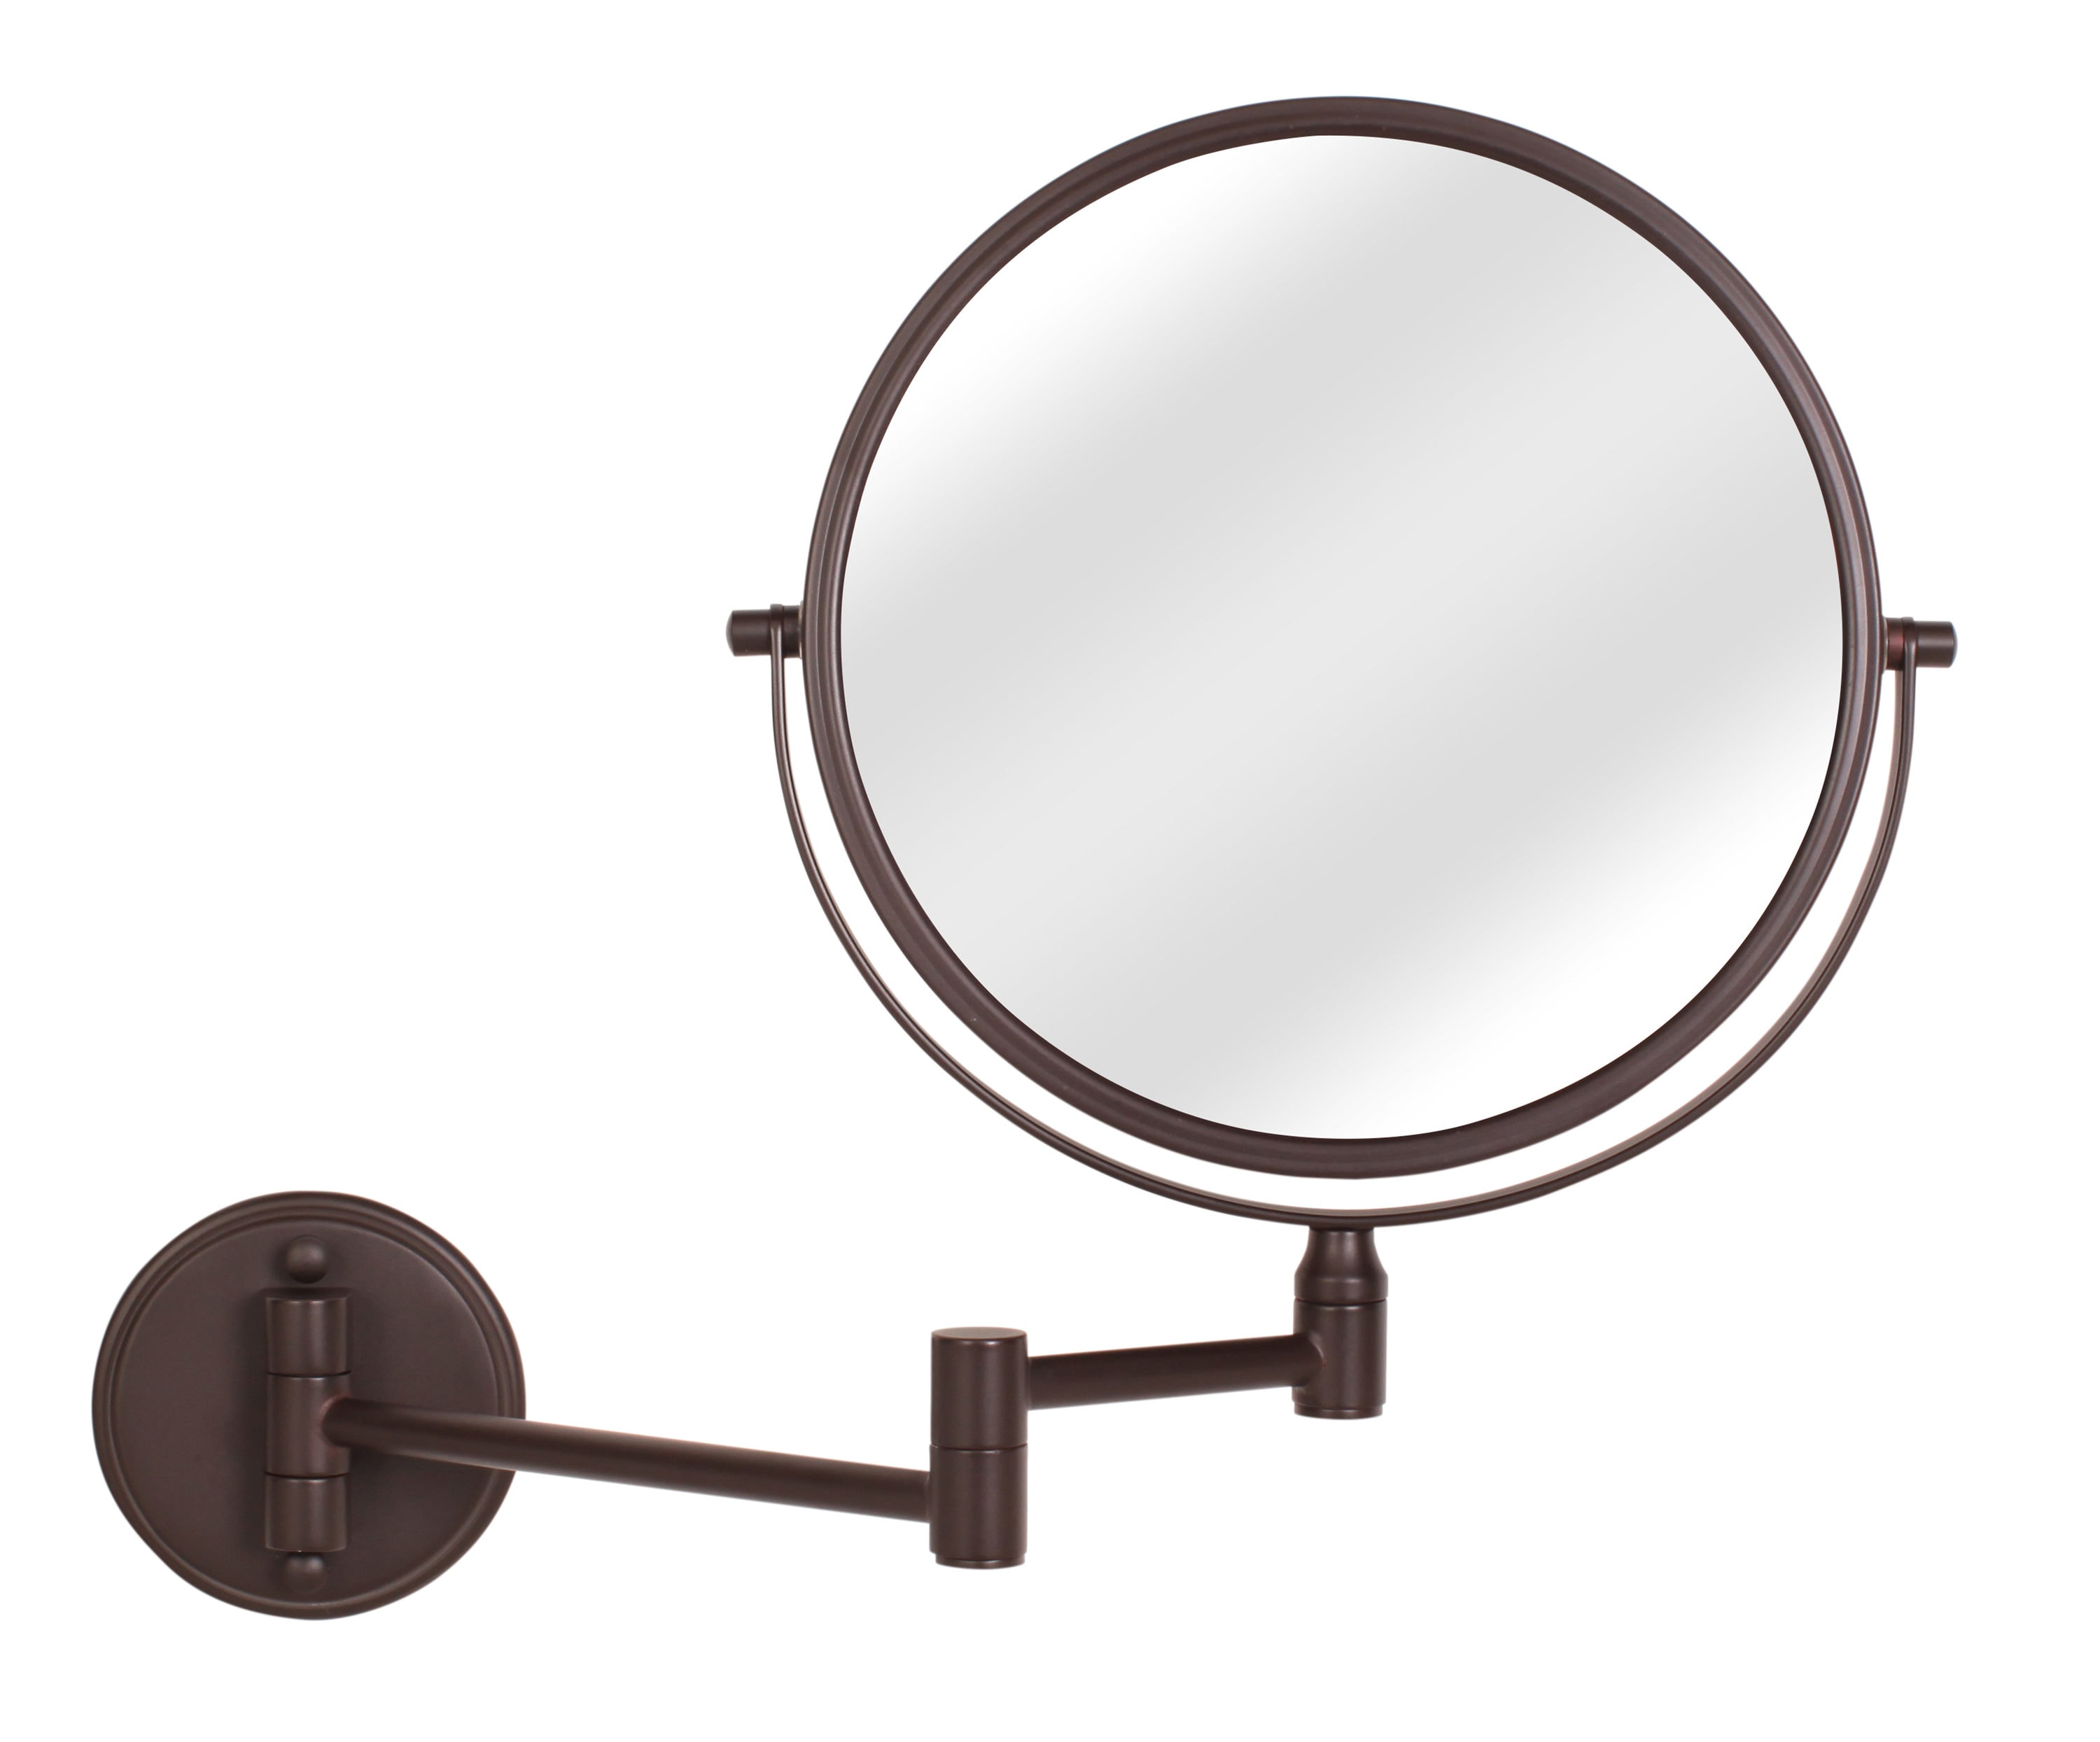 mountable makeup mirror OFF-60% Shipping free